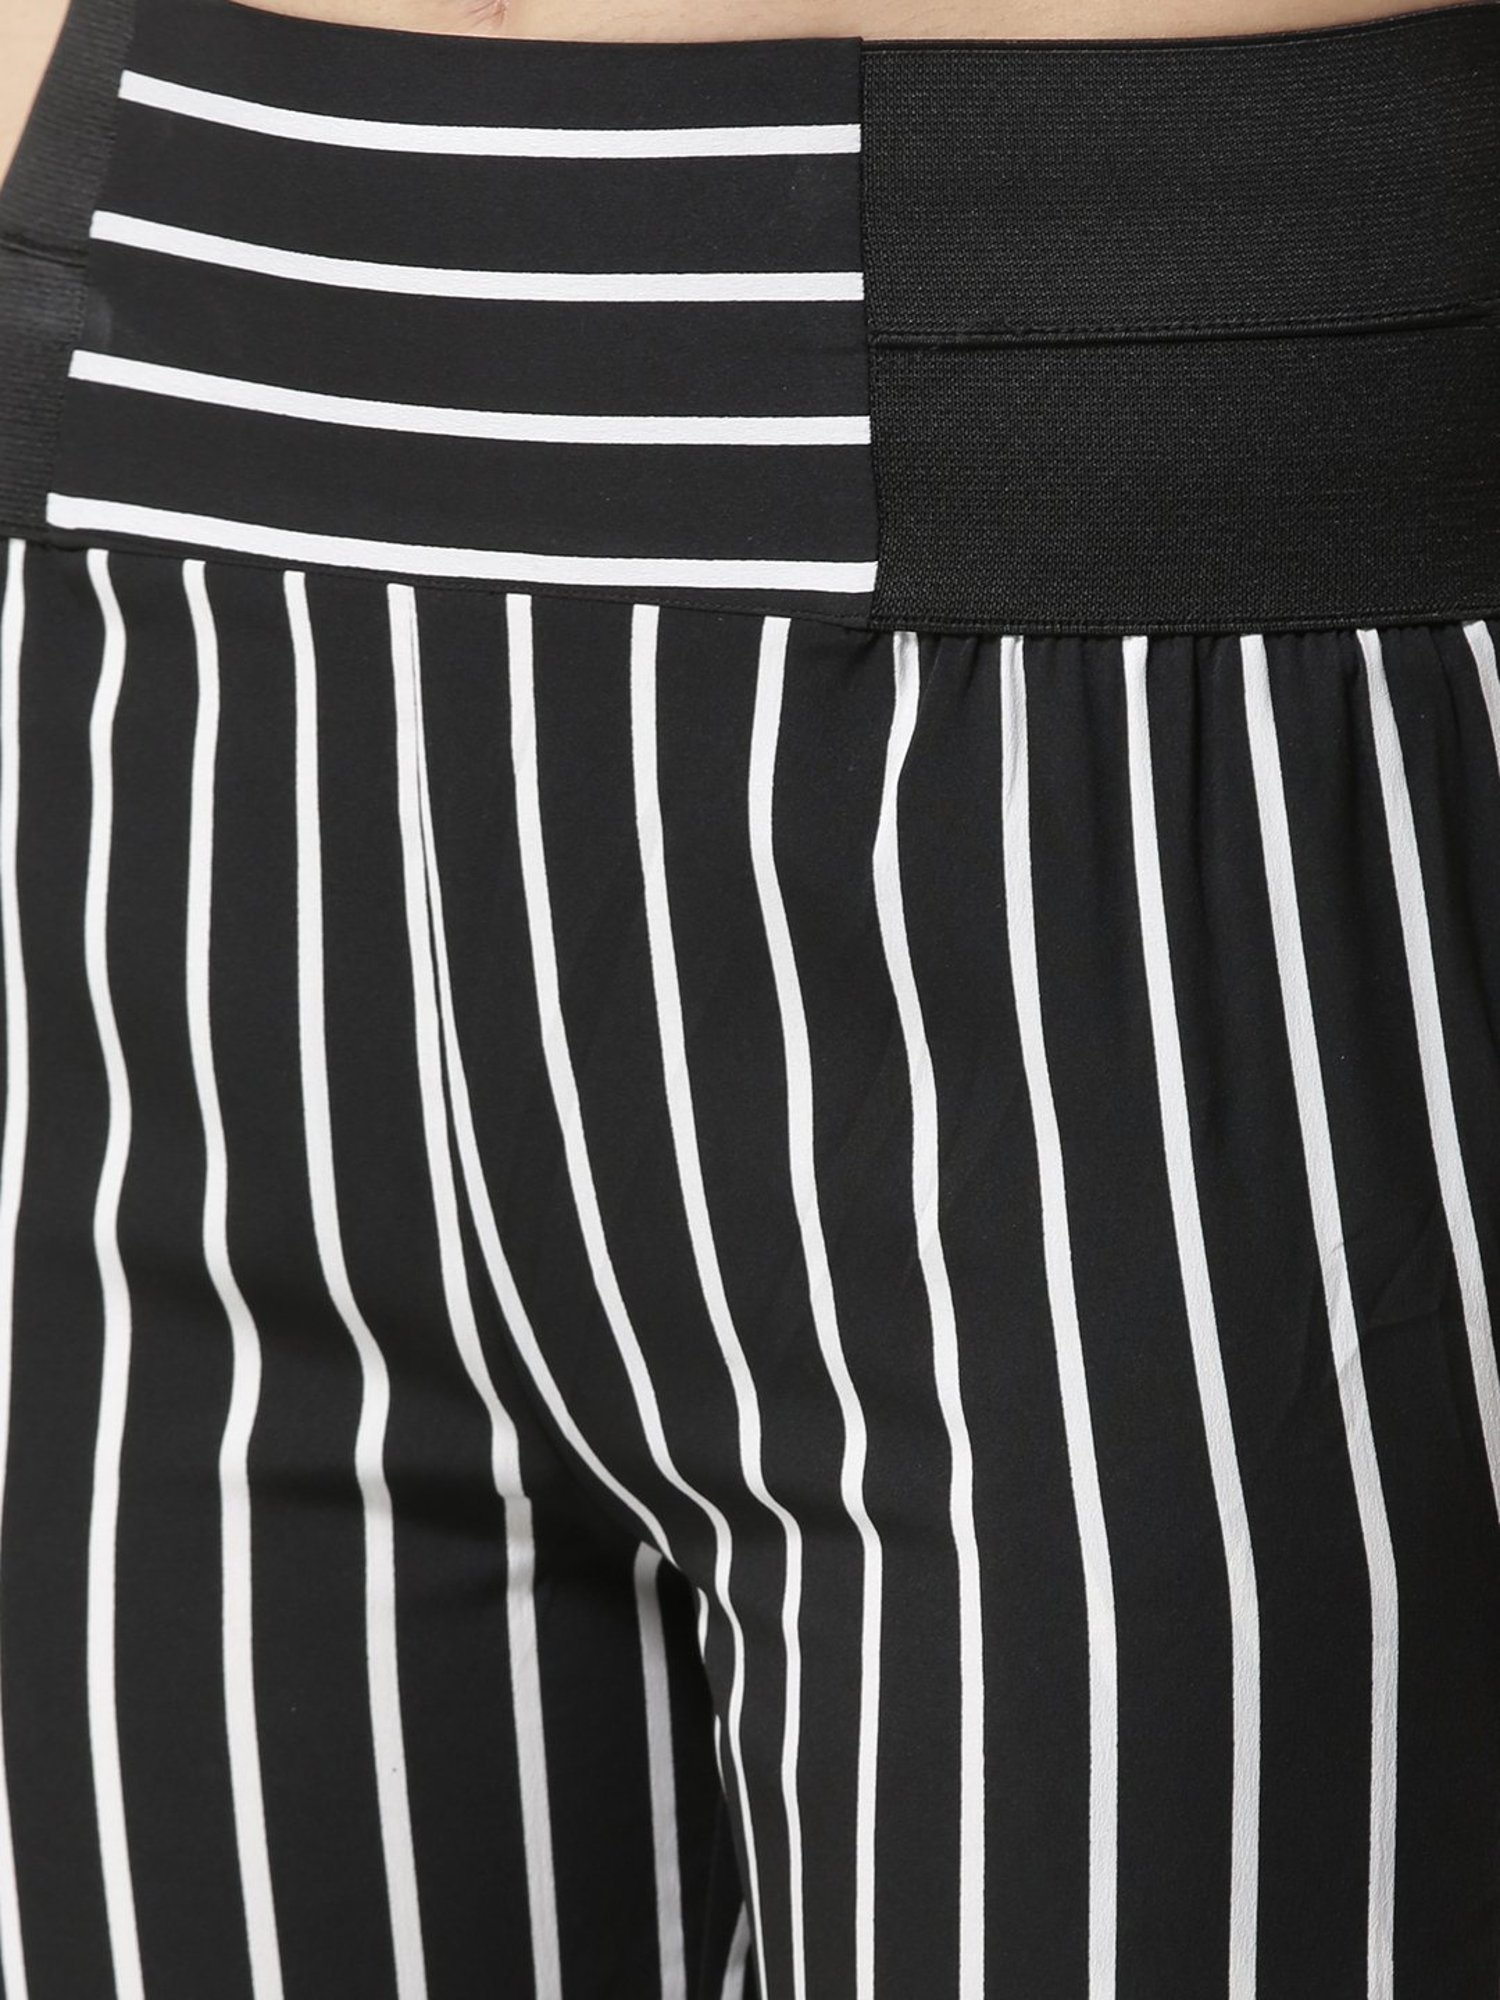 Buy AMYDUS Women's Plus Size Black White Striped Pants at Amazon.in